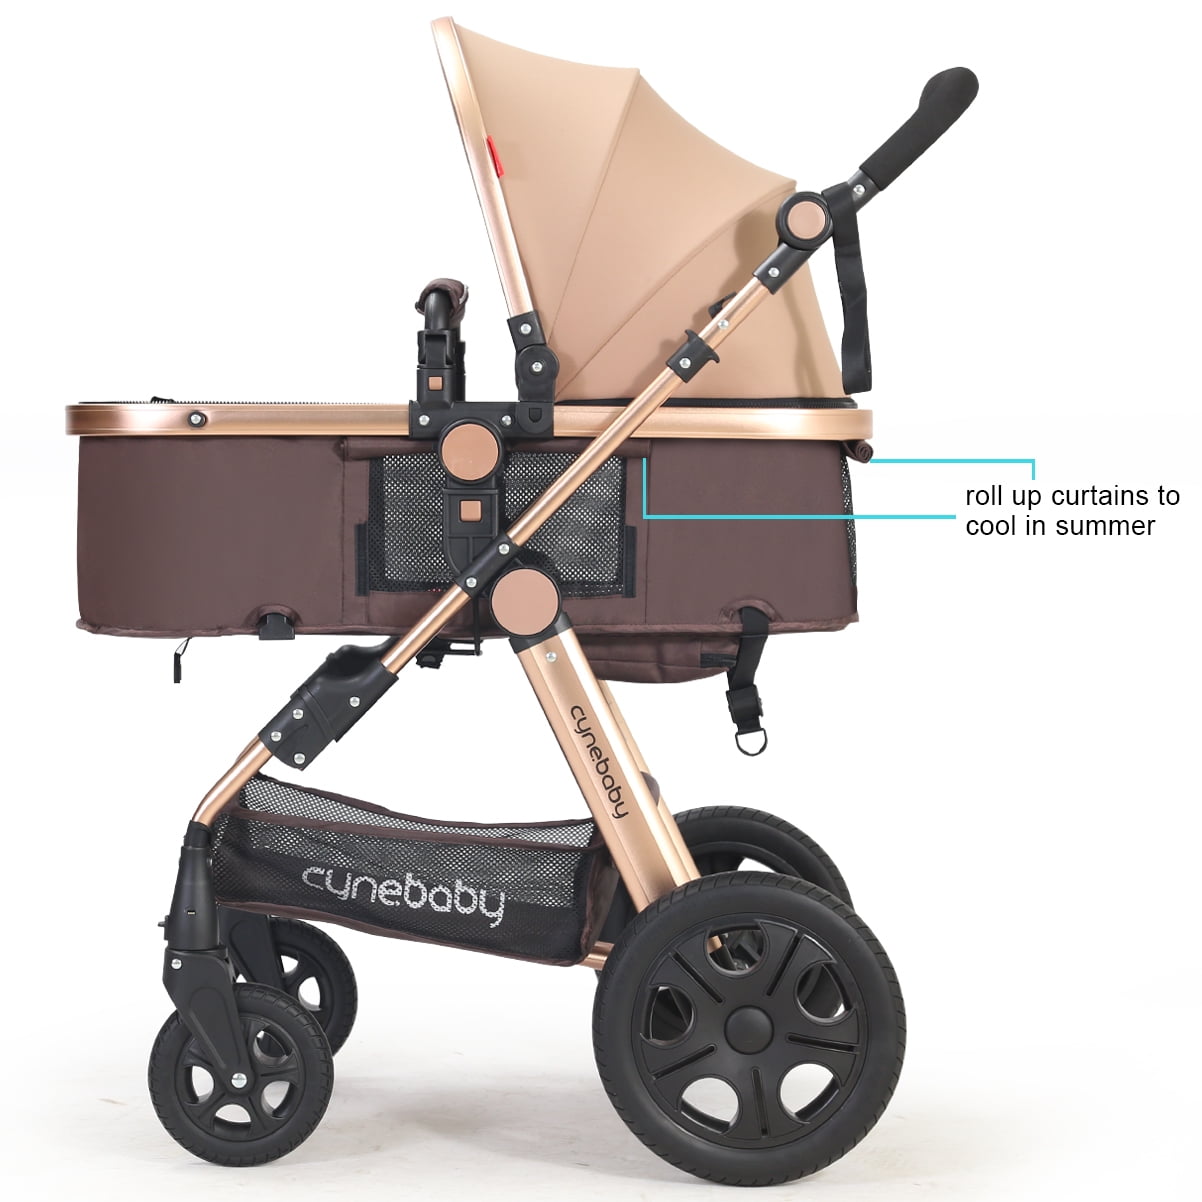 Cynebaby Newborn Toddler Baby Stroller with Reversible Seat, Rose Gold - Walmart.com